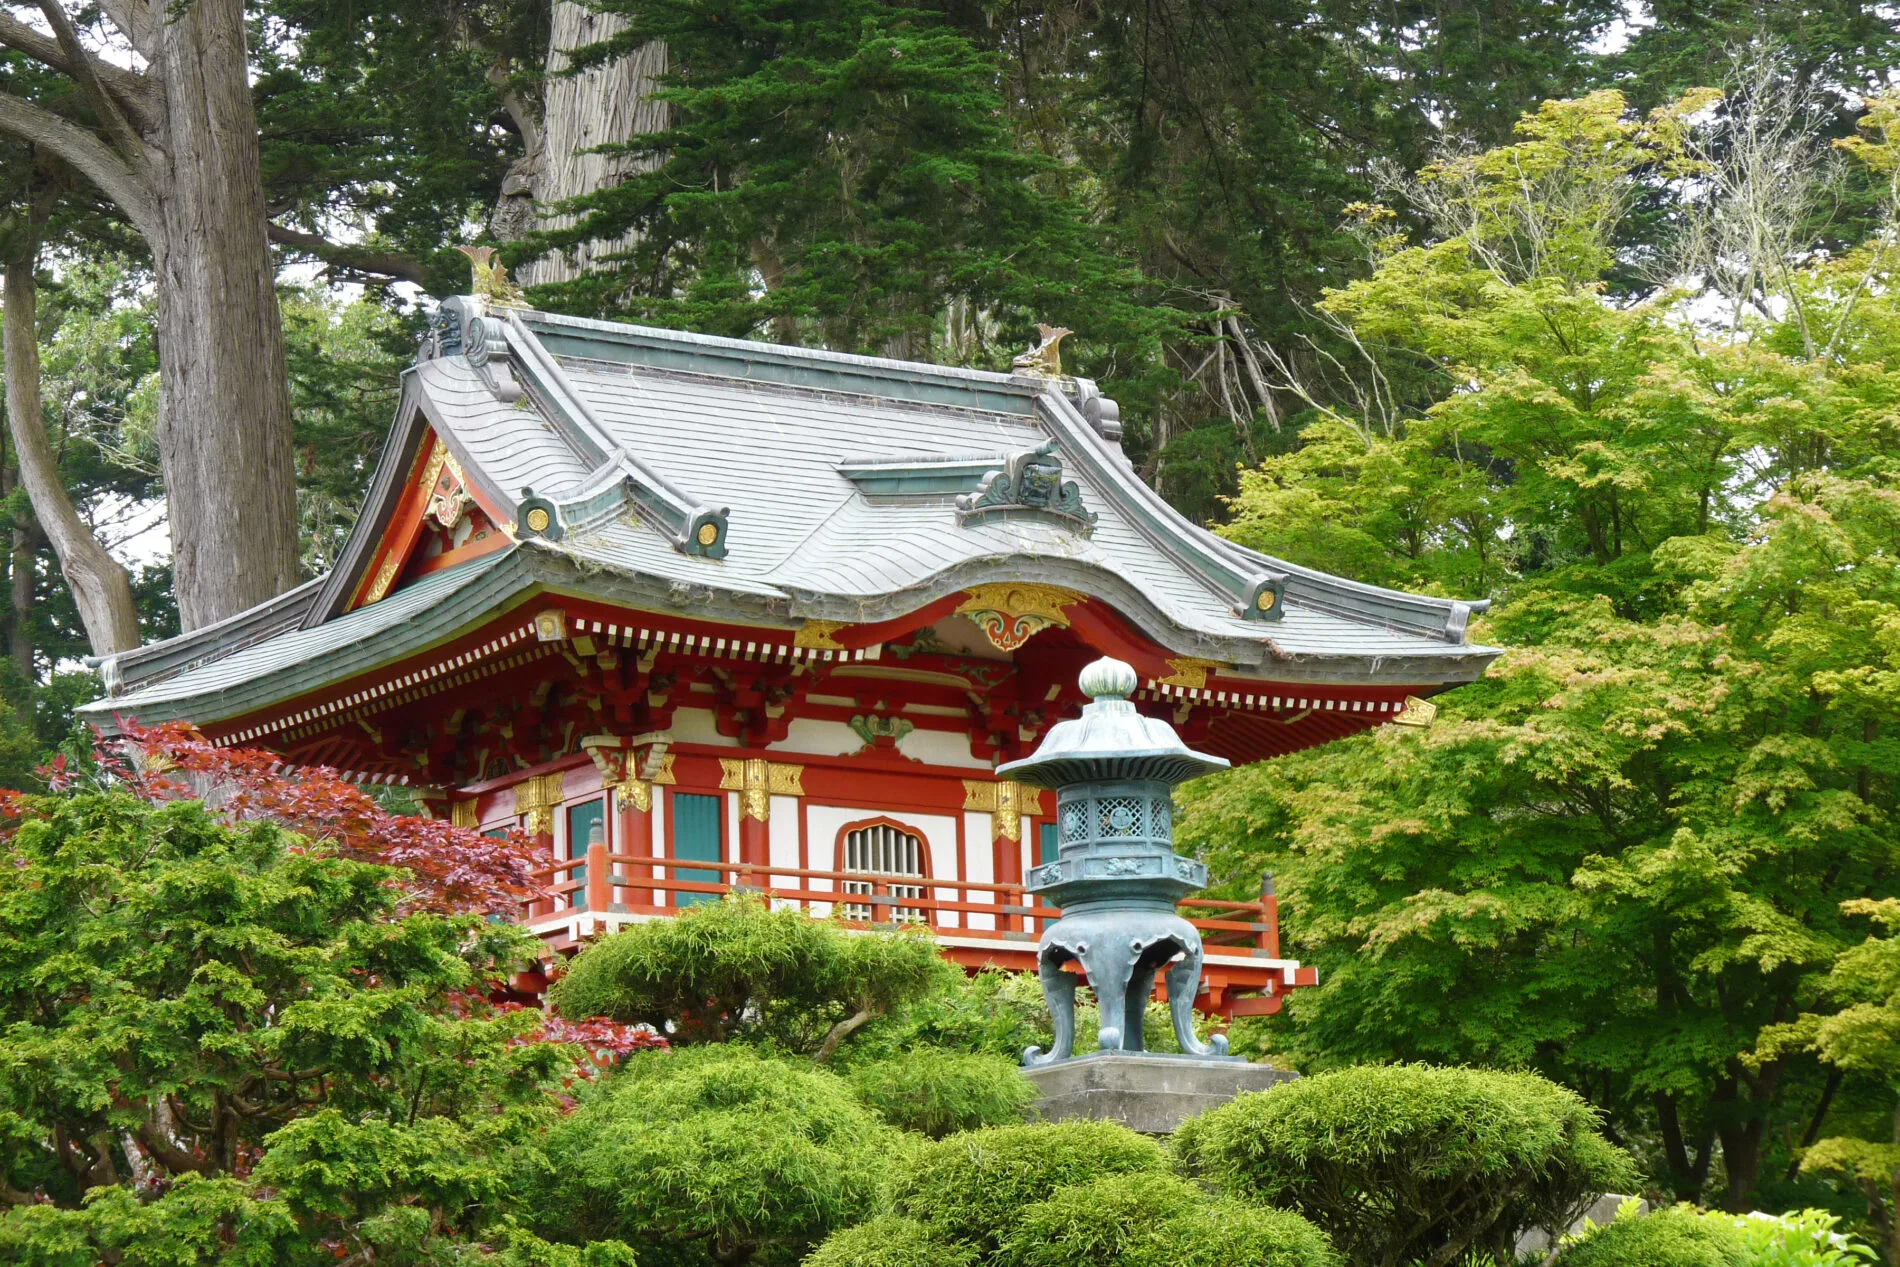 Temple Gate in the Japanese Tea Garden in Golden Gate Park, San Francisco.